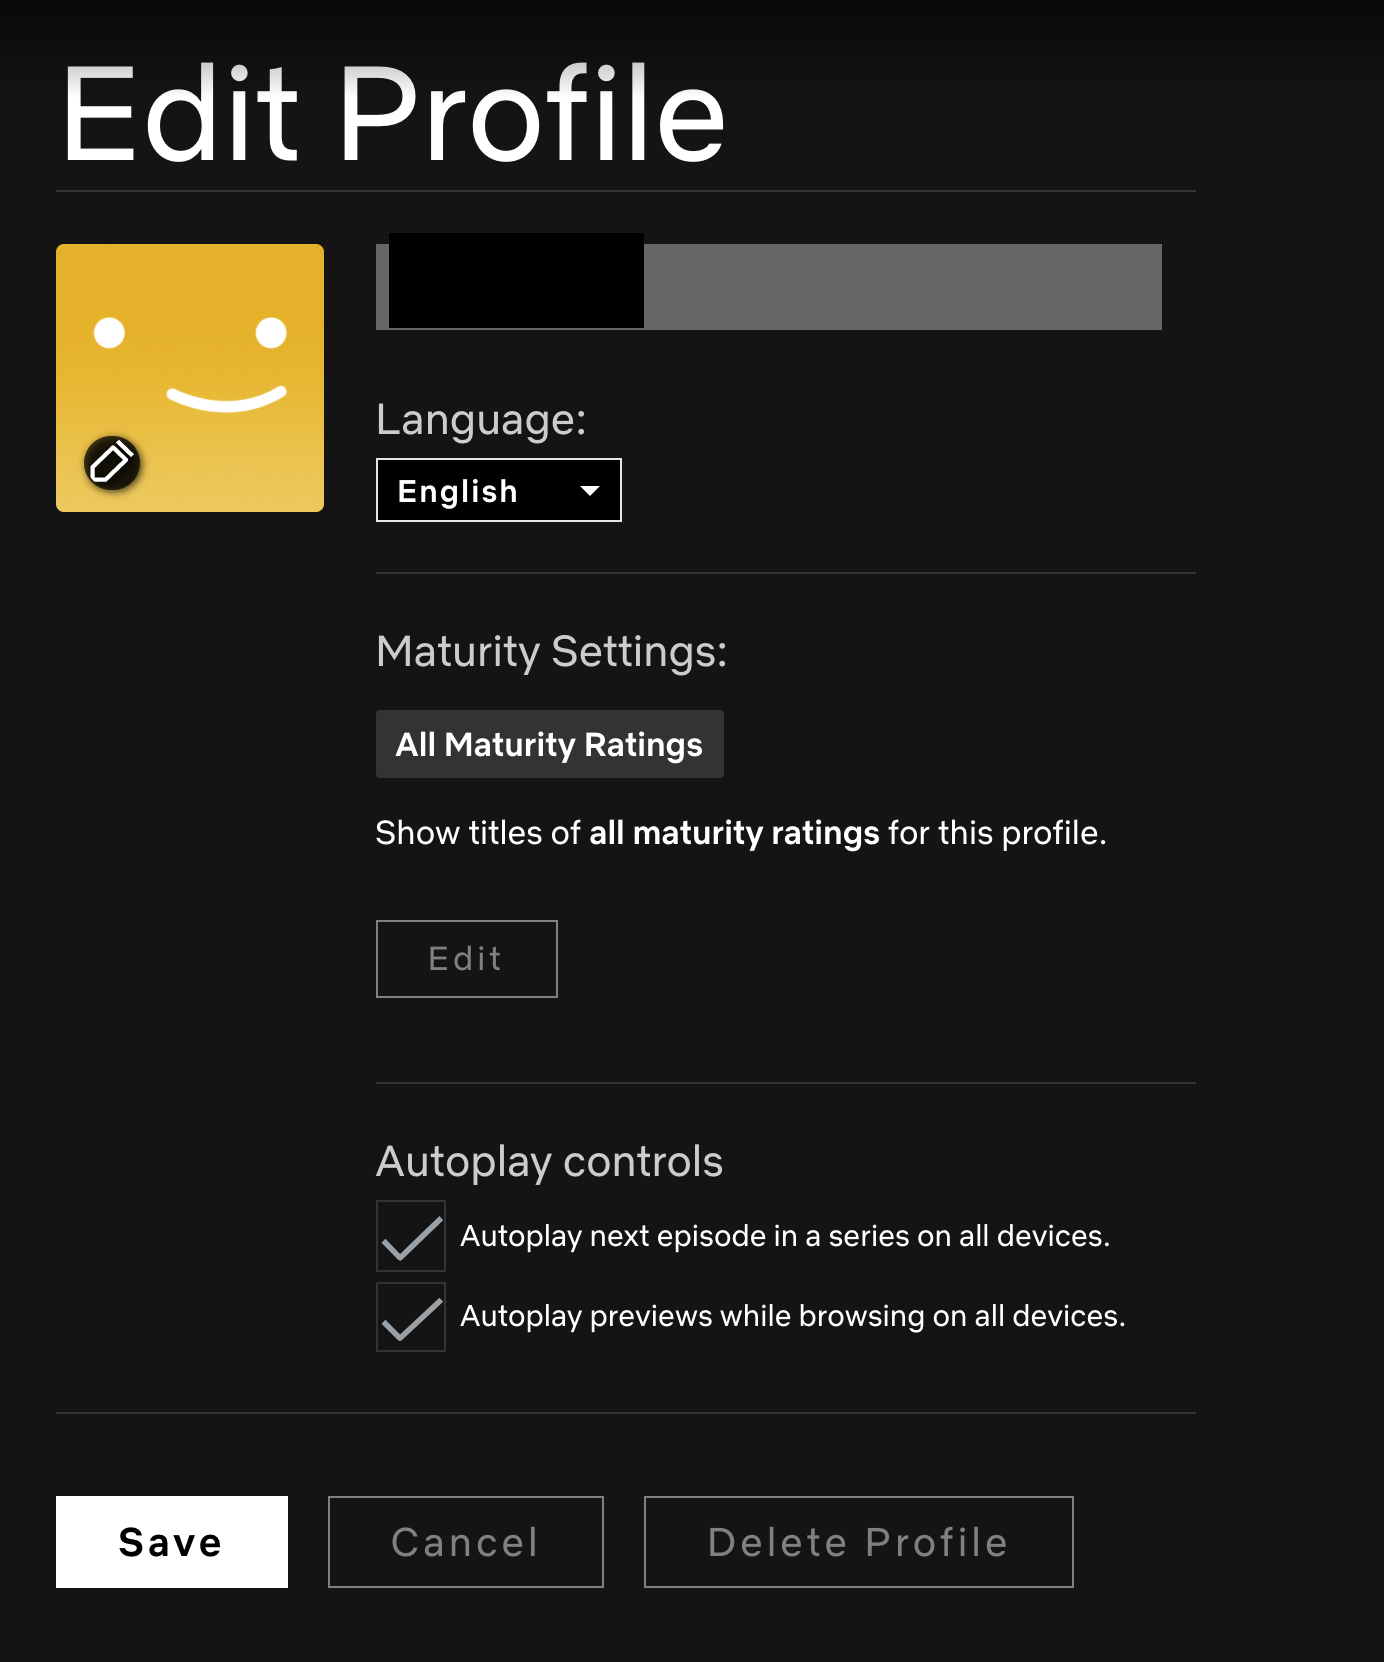 netlfix edit profile menu